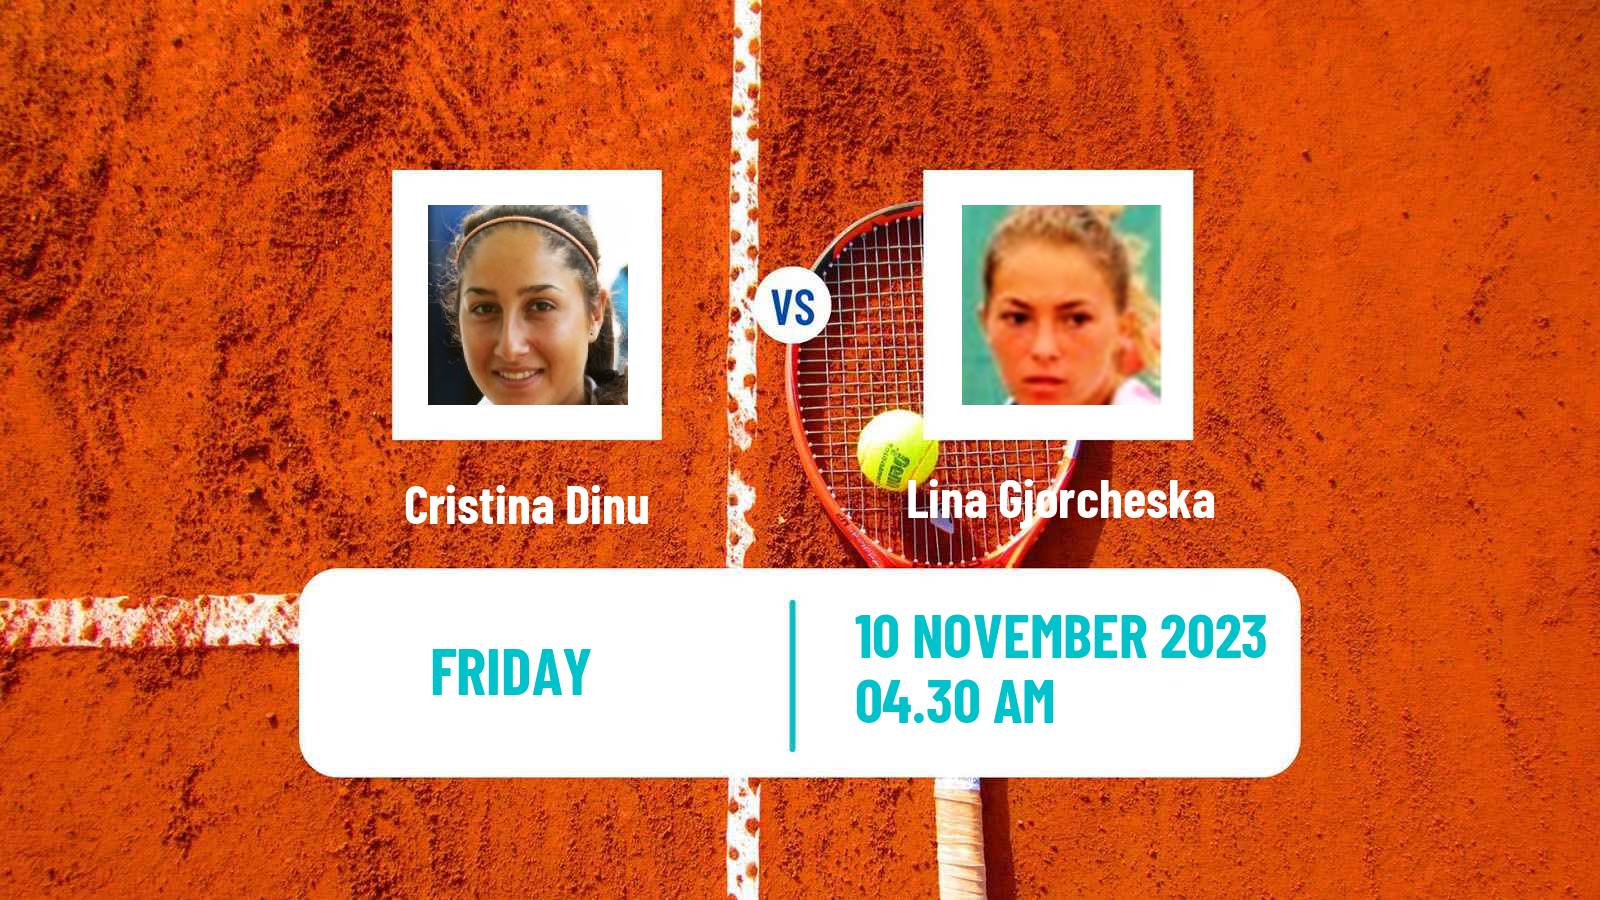 Tennis ITF W40 Heraklion 2 Women Cristina Dinu - Lina Gjorcheska